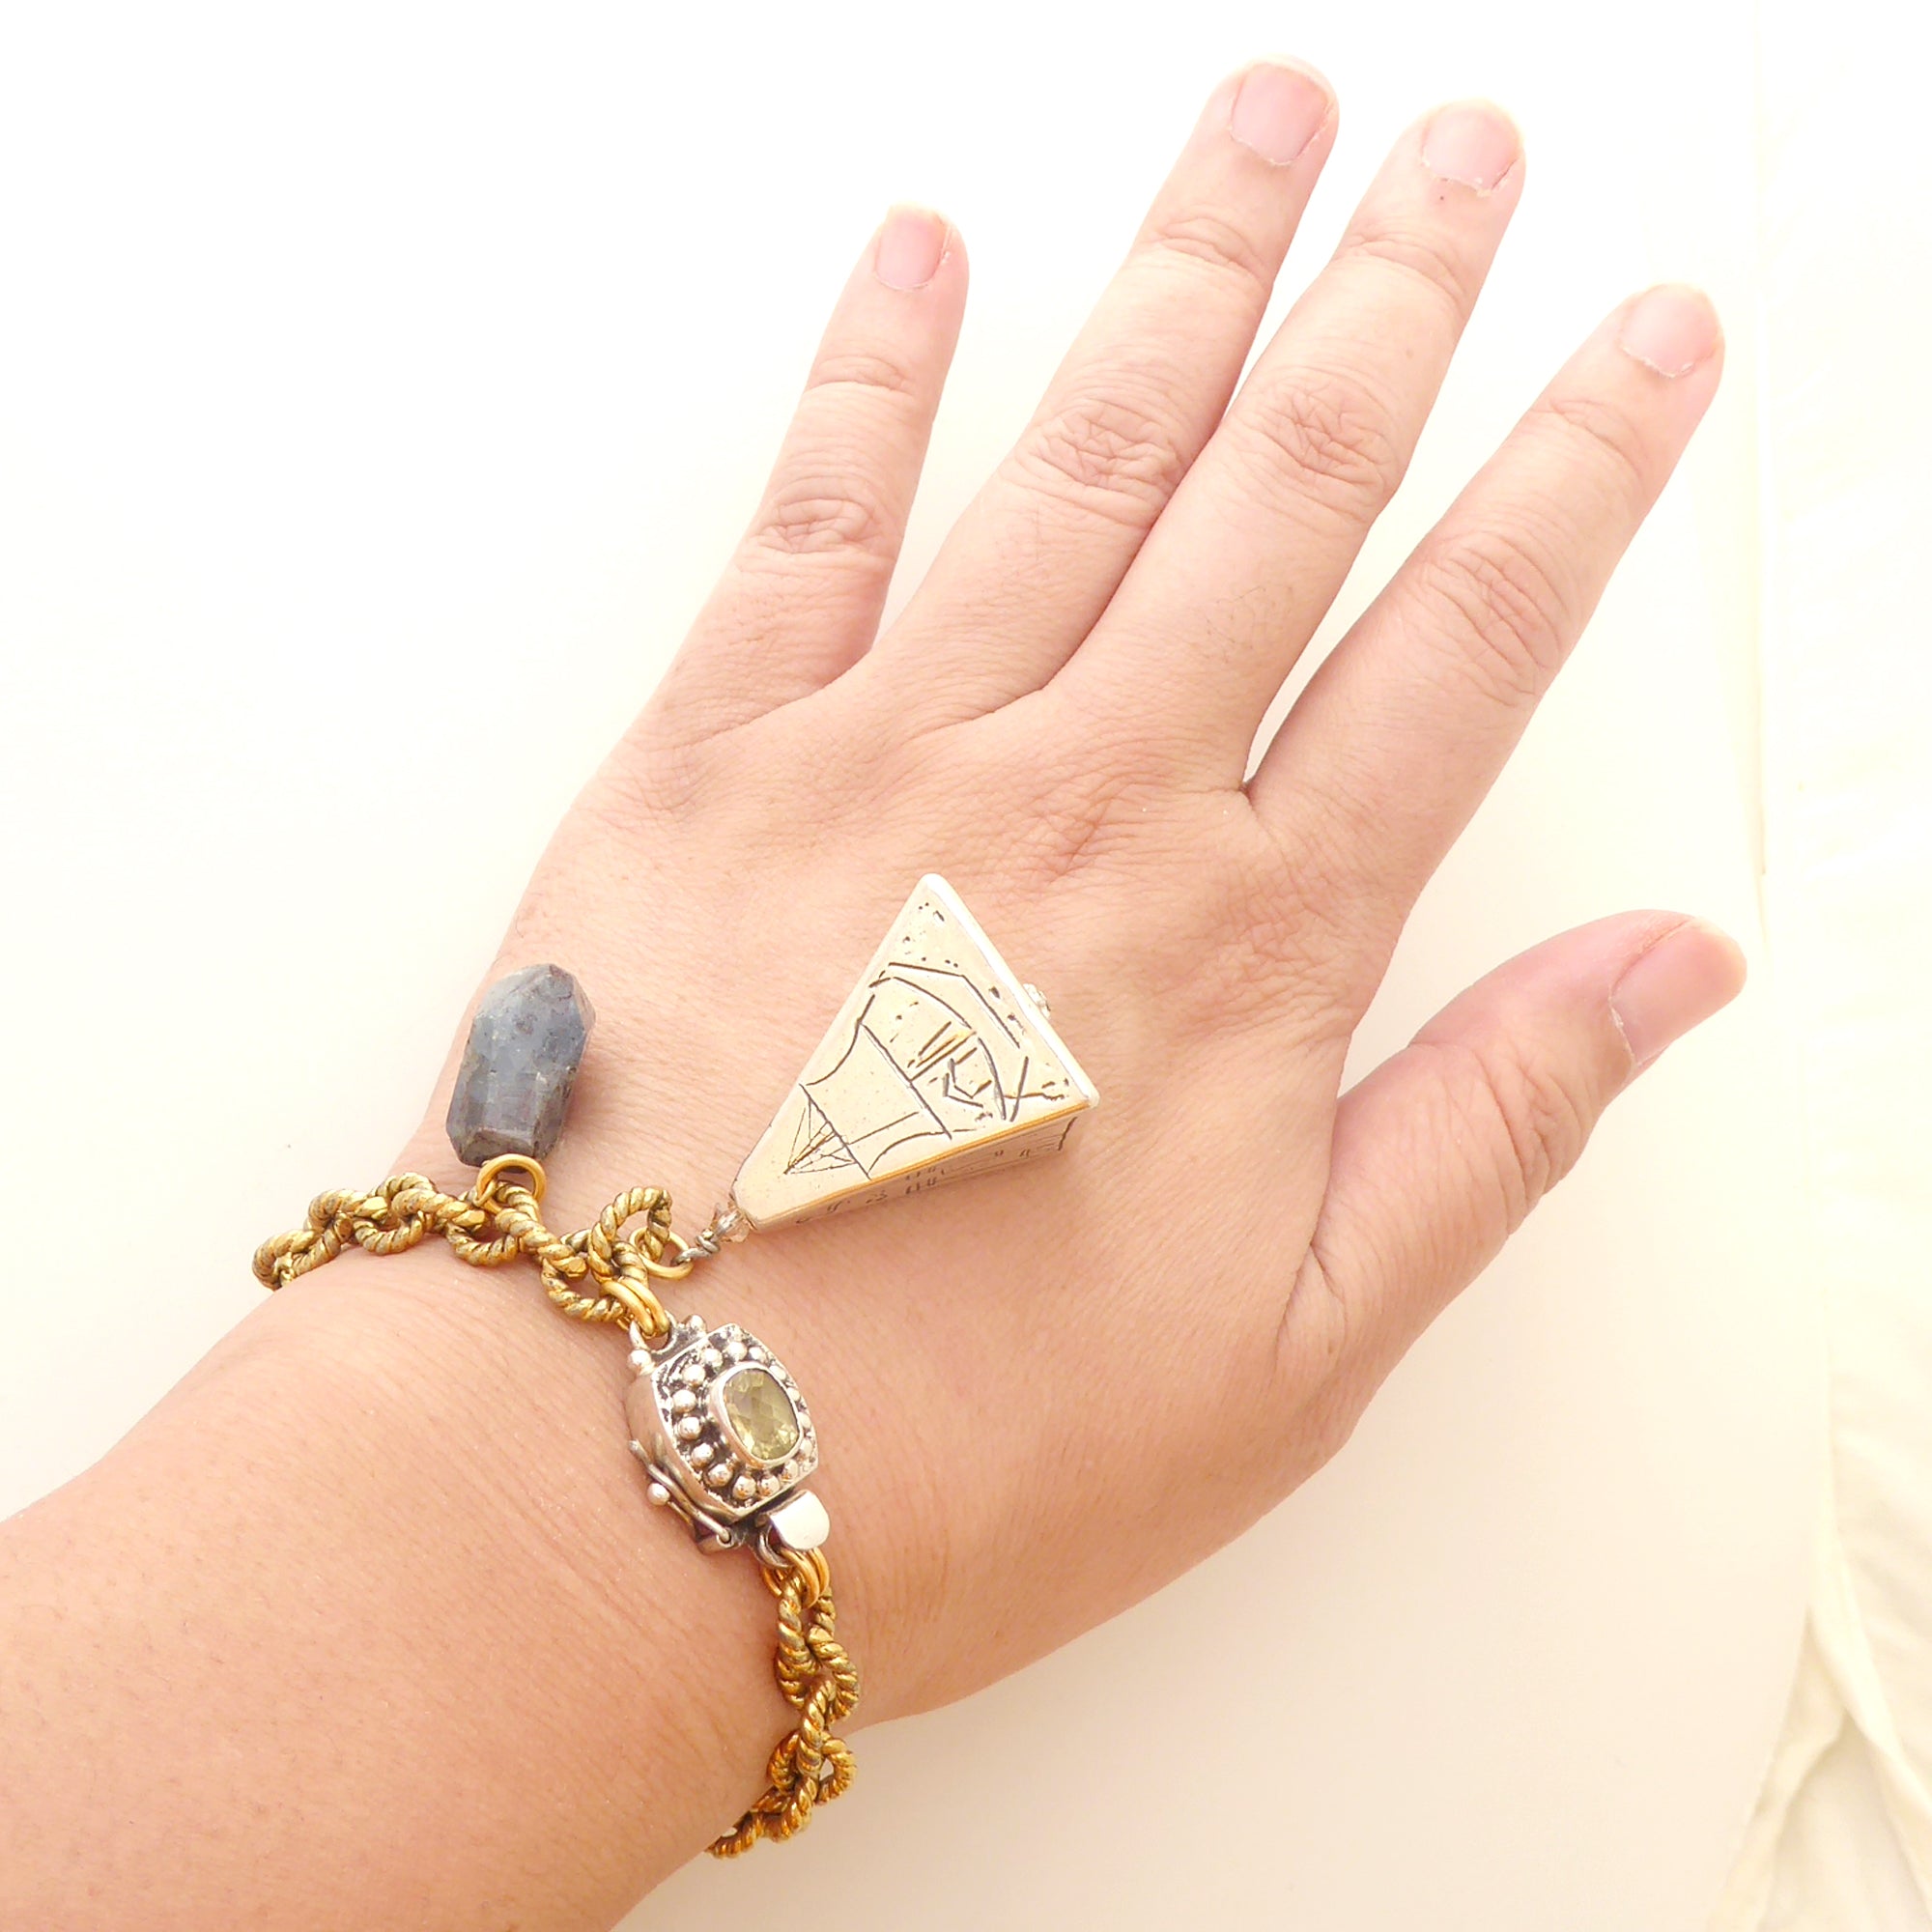 Silver pyramid bracelet by Jenny Dayco 8